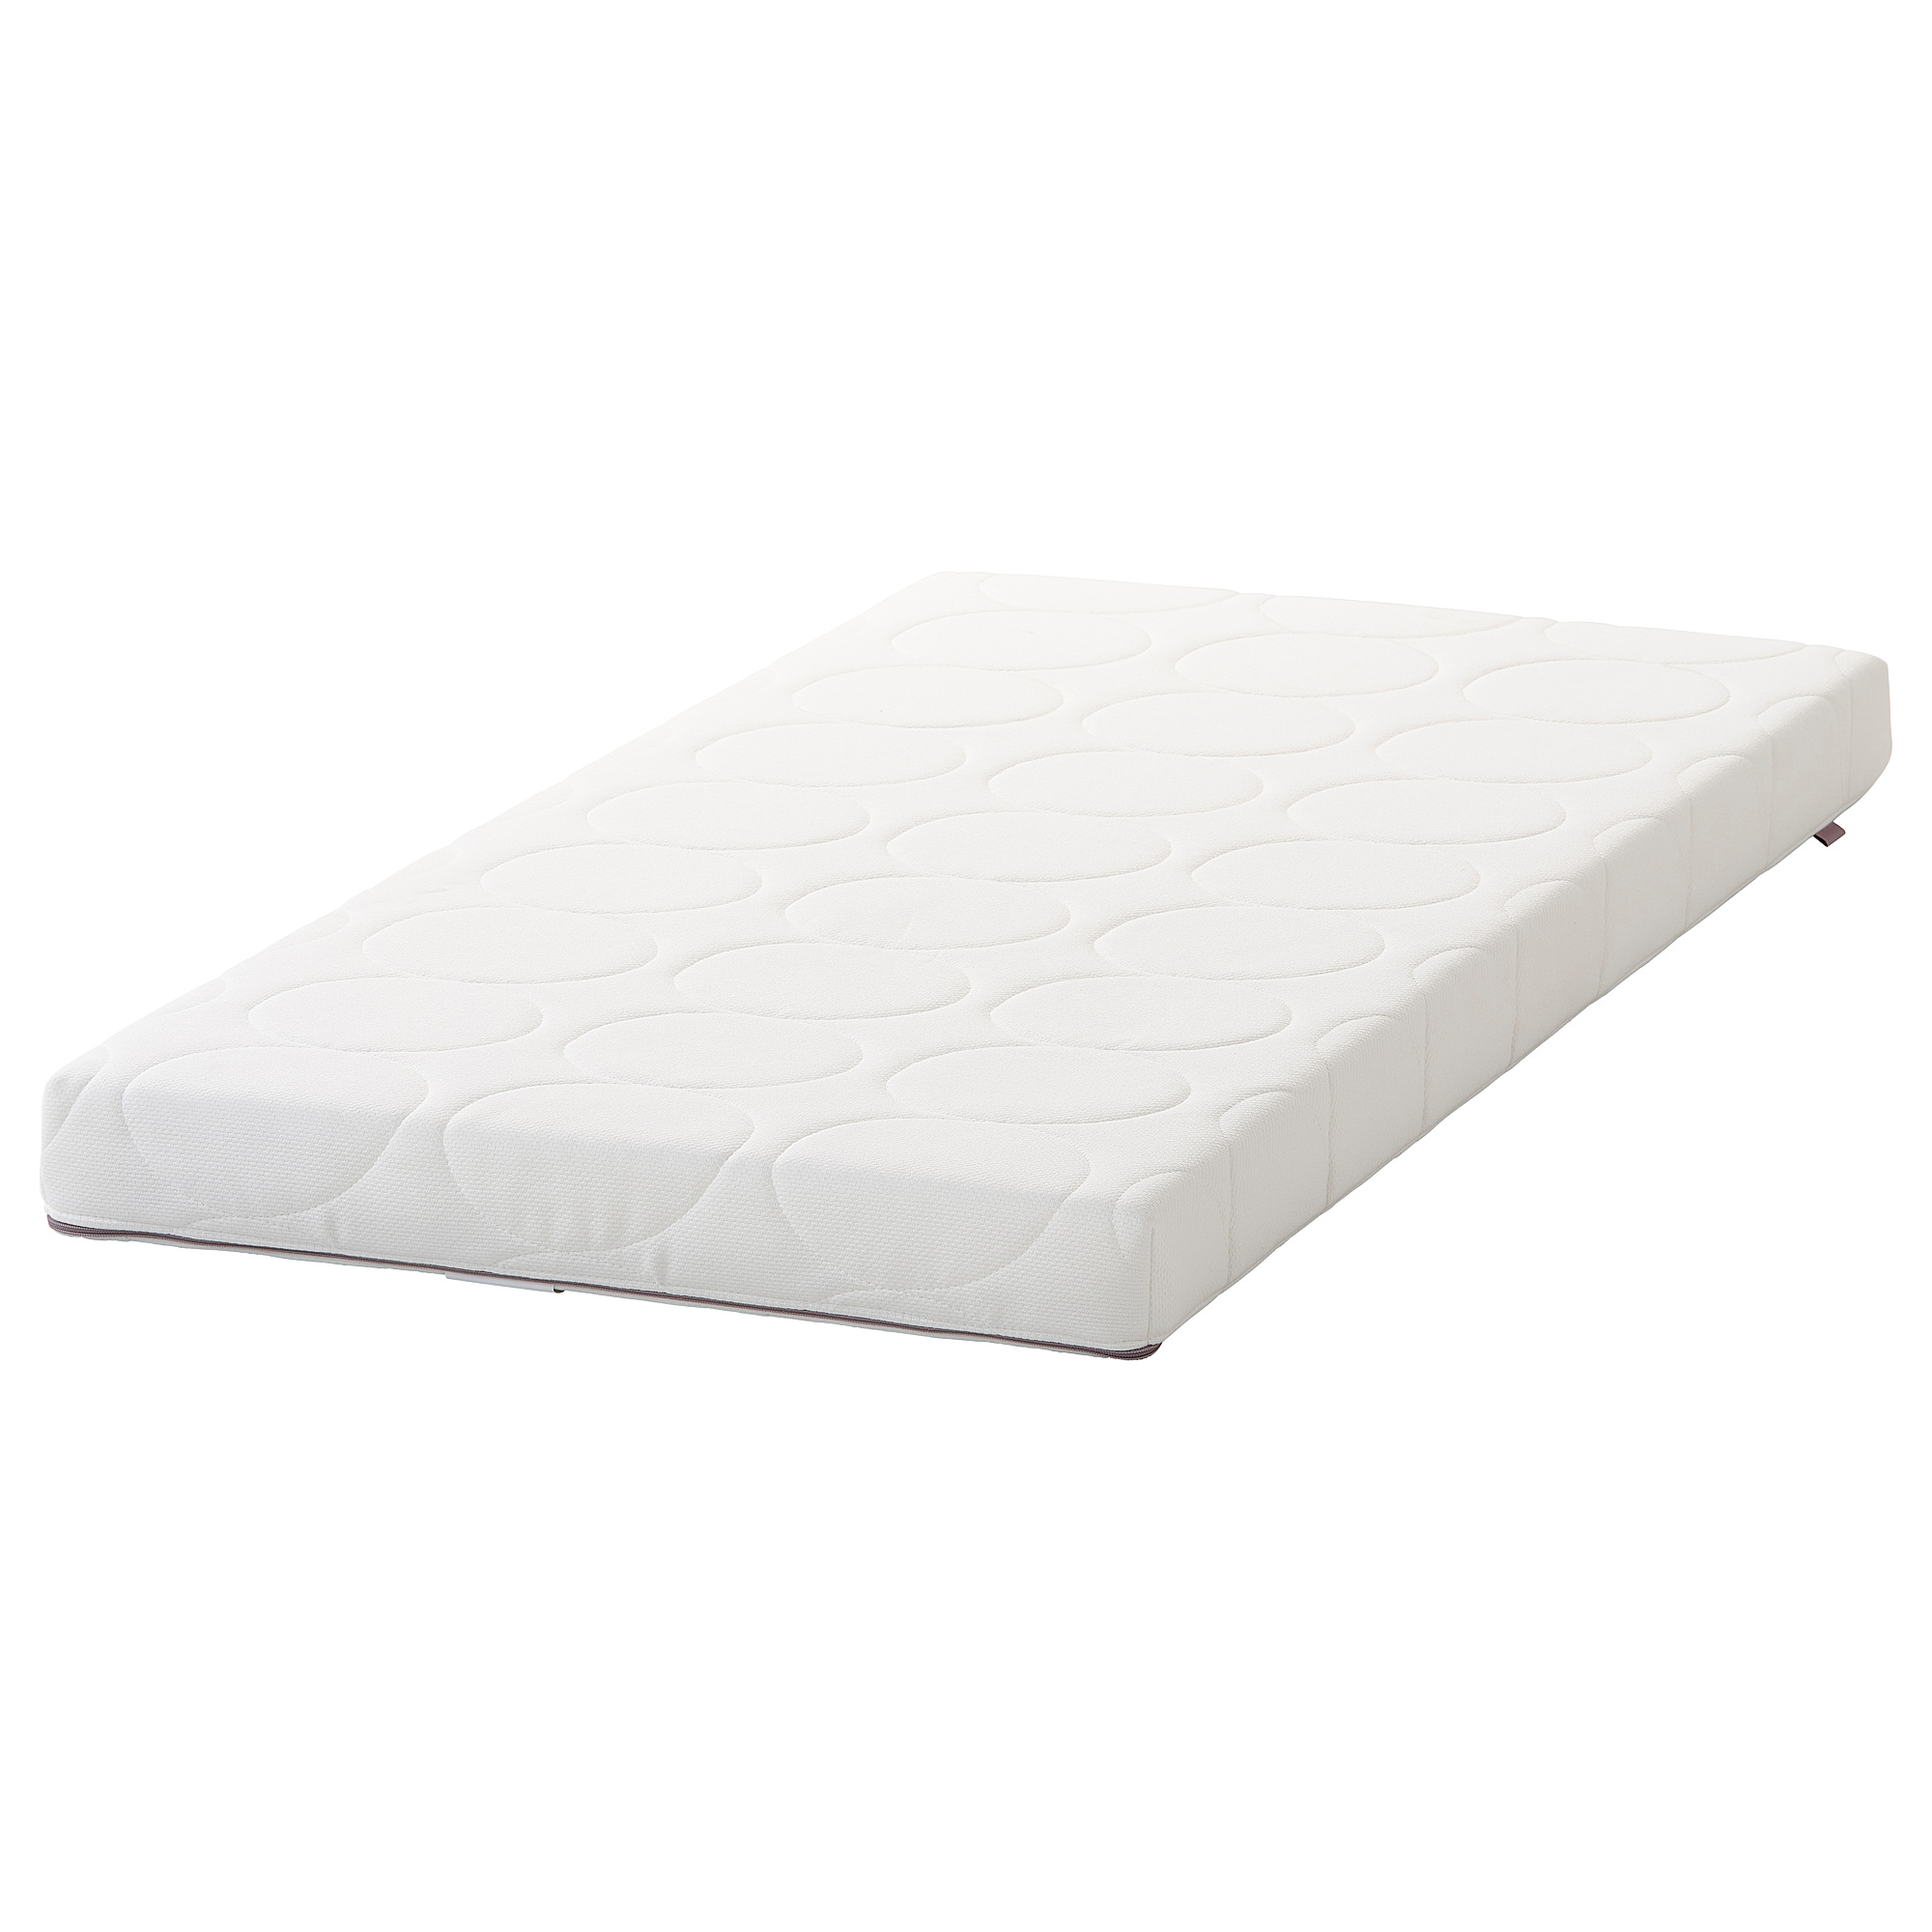 SKÖNAST foam mattress for cot